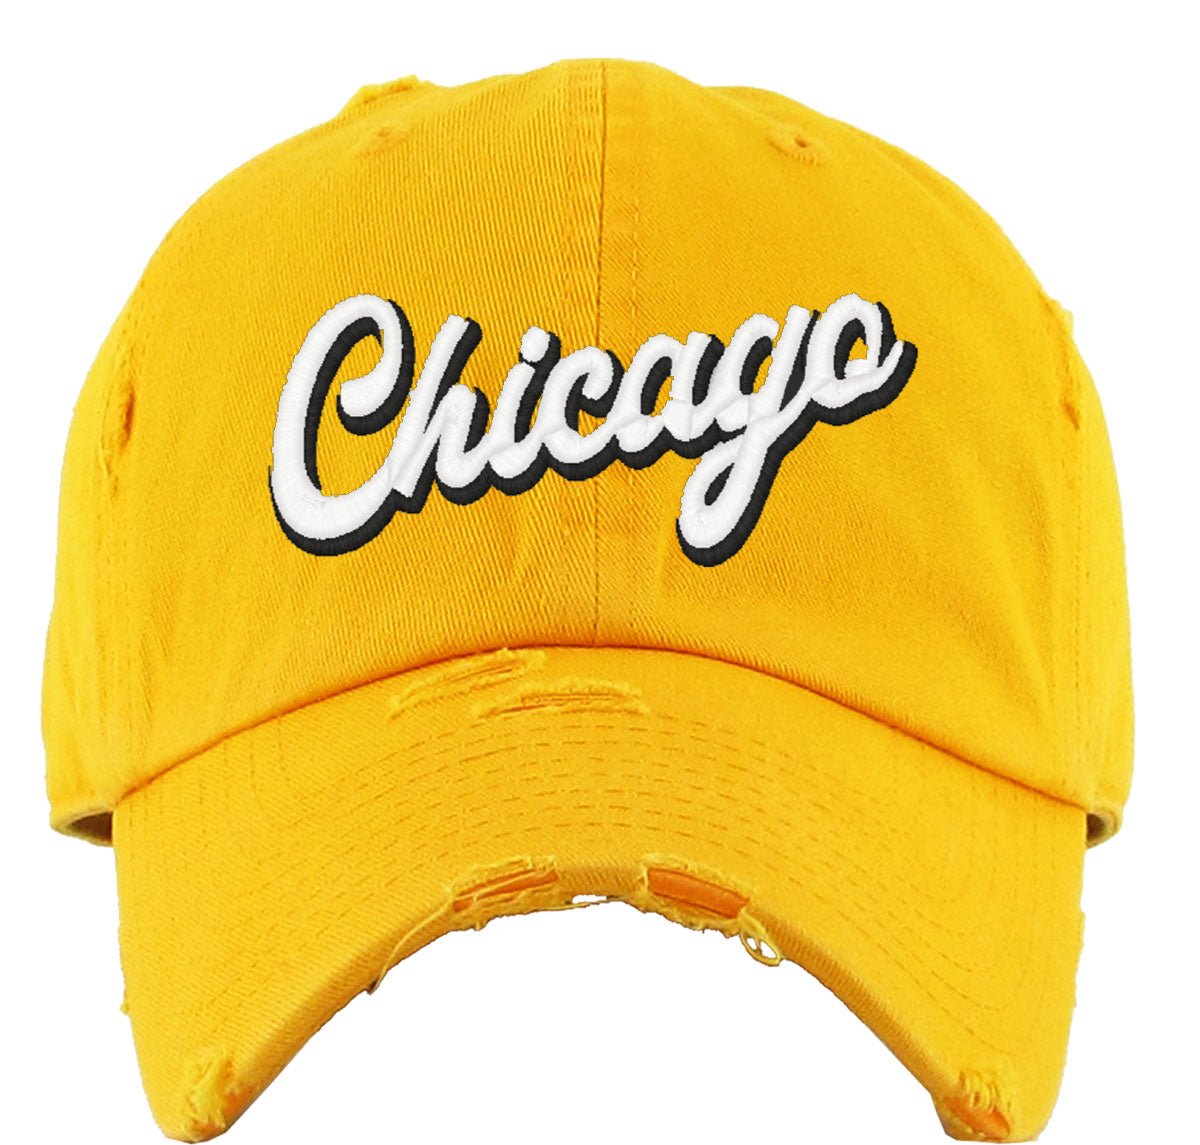 Chicago Vintage Baseball Cap